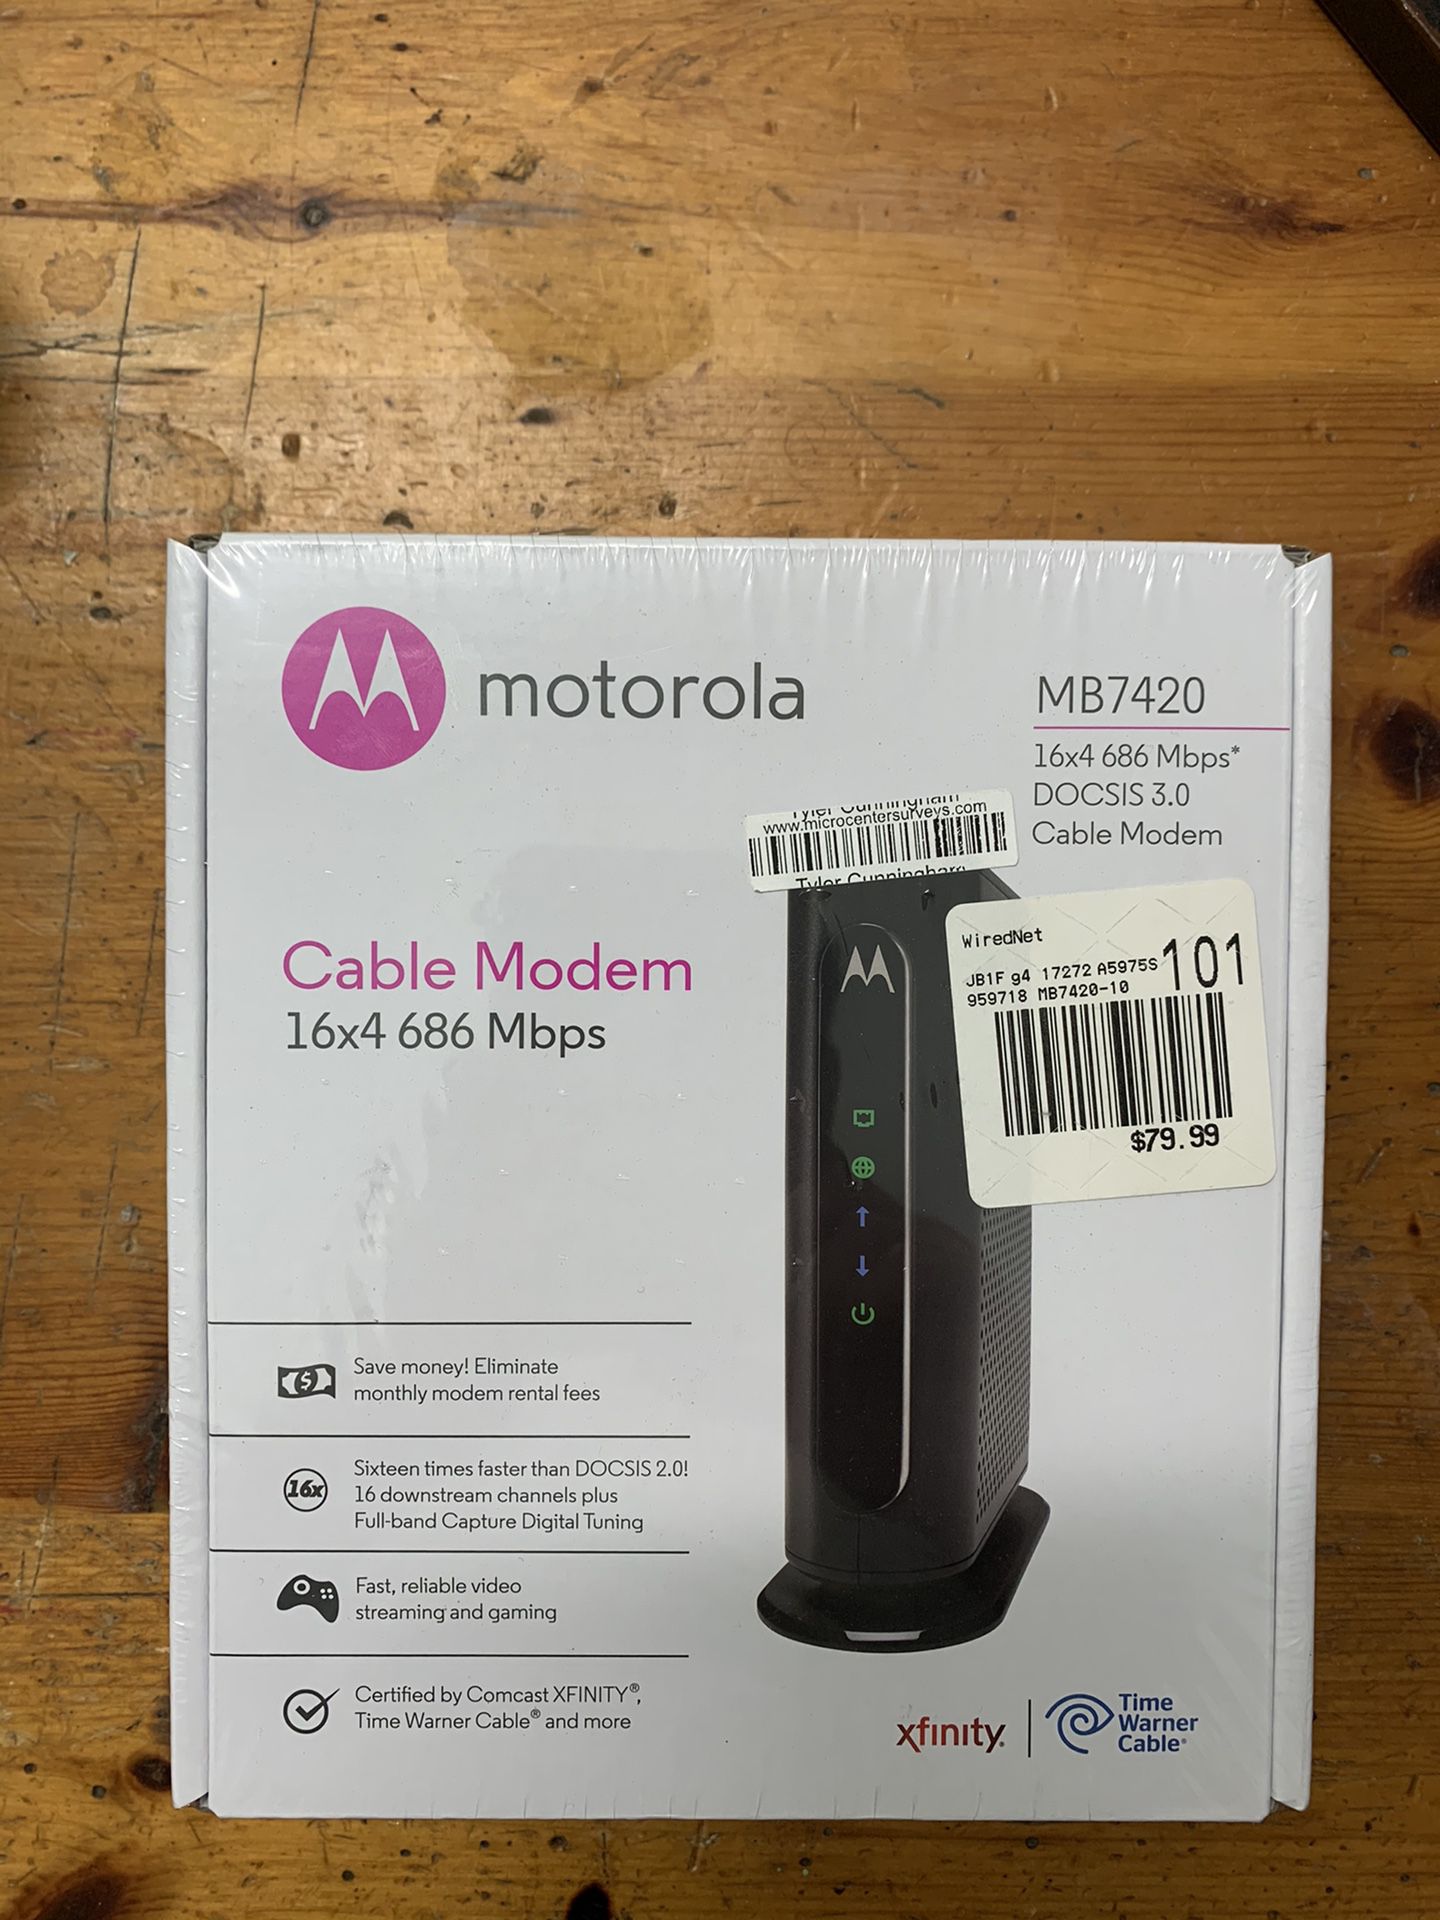 Motorola cable modem MB7420